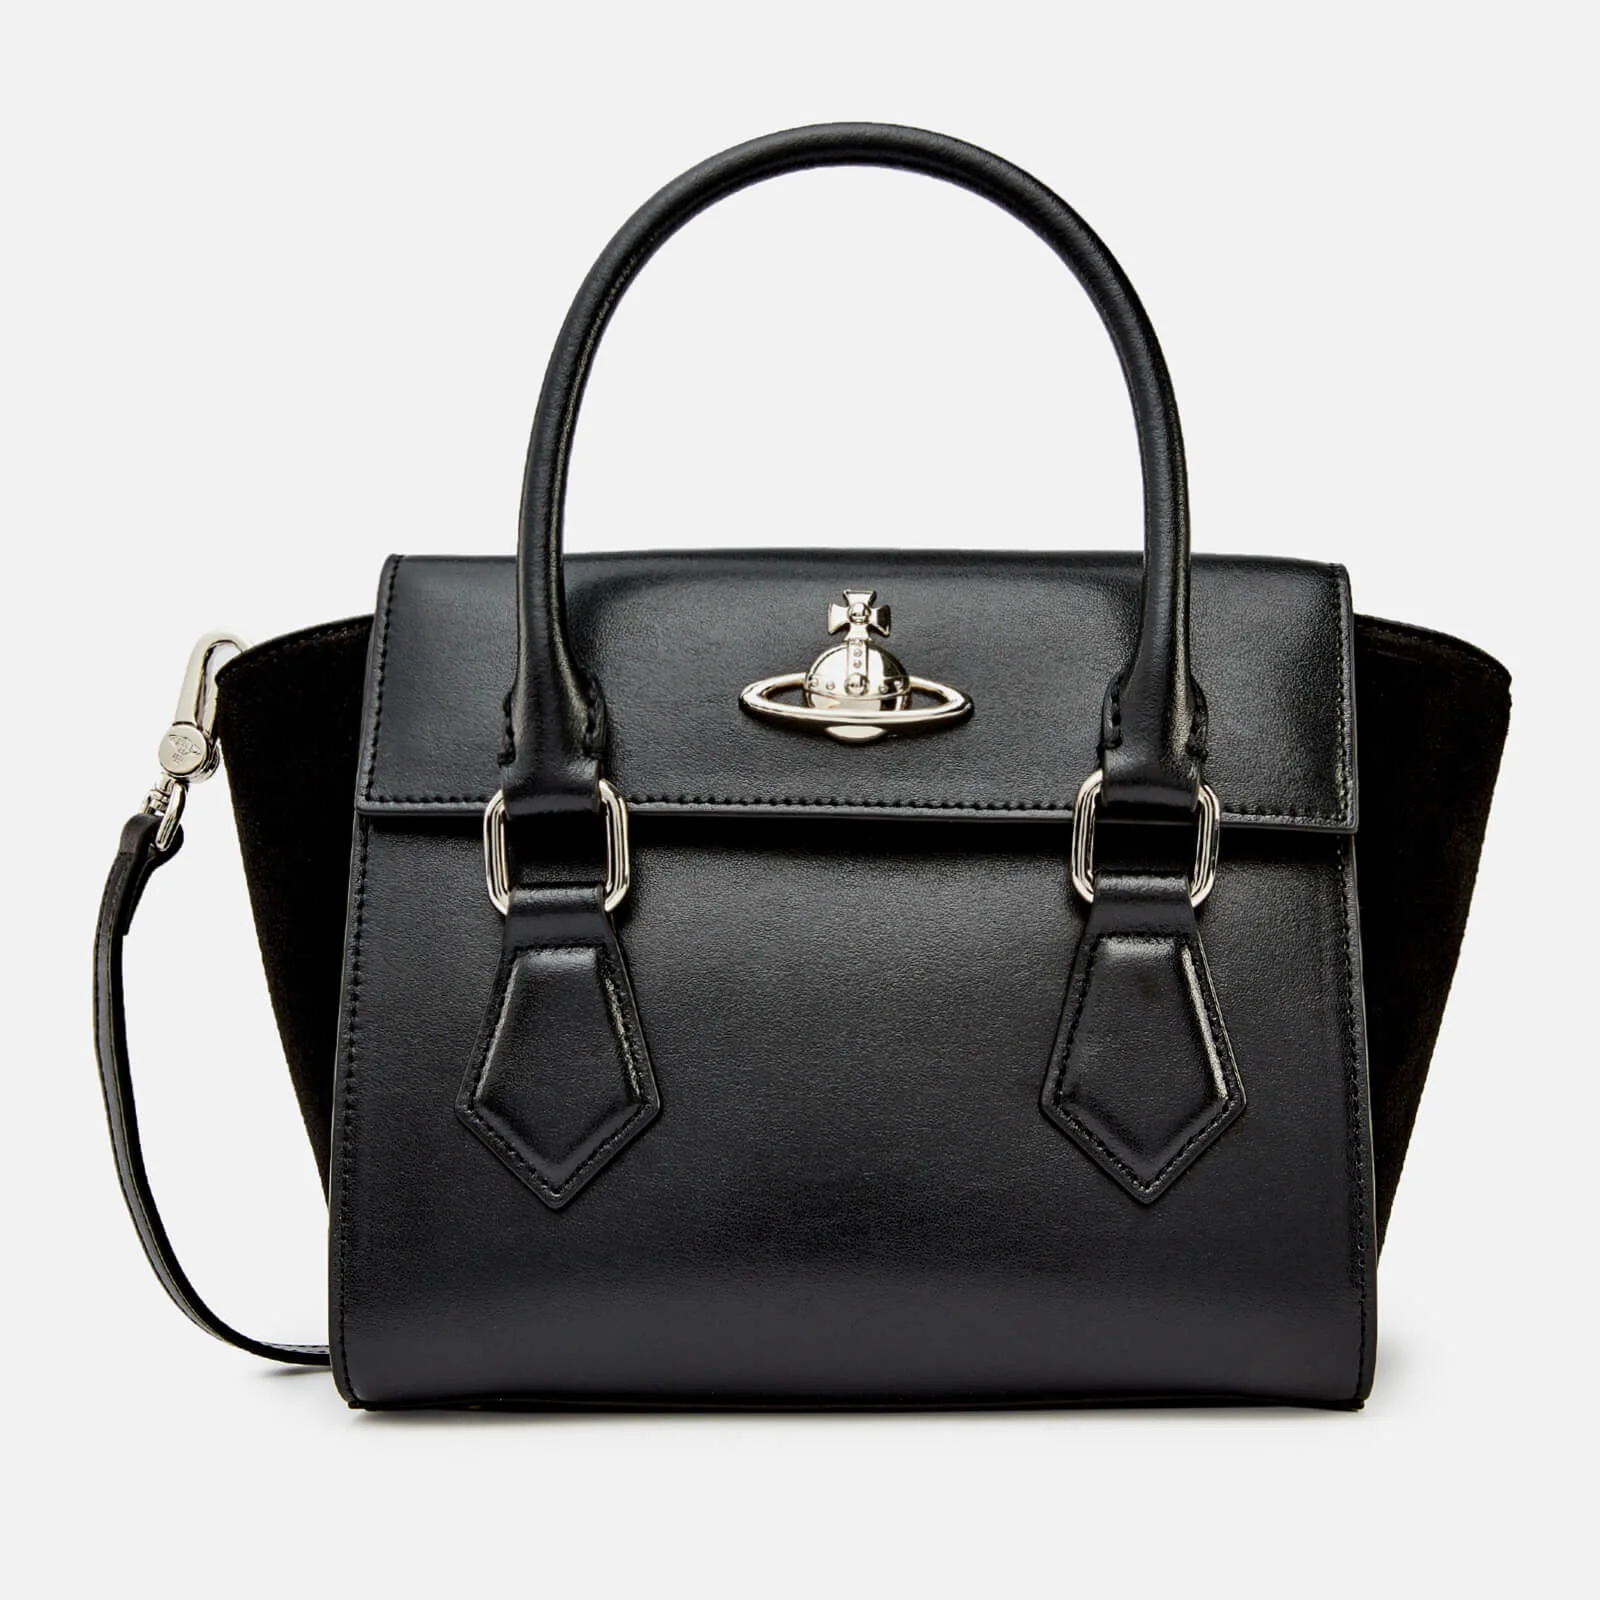 Vivienne Westwood Women's Matilda Small Handbag - Black Image 1